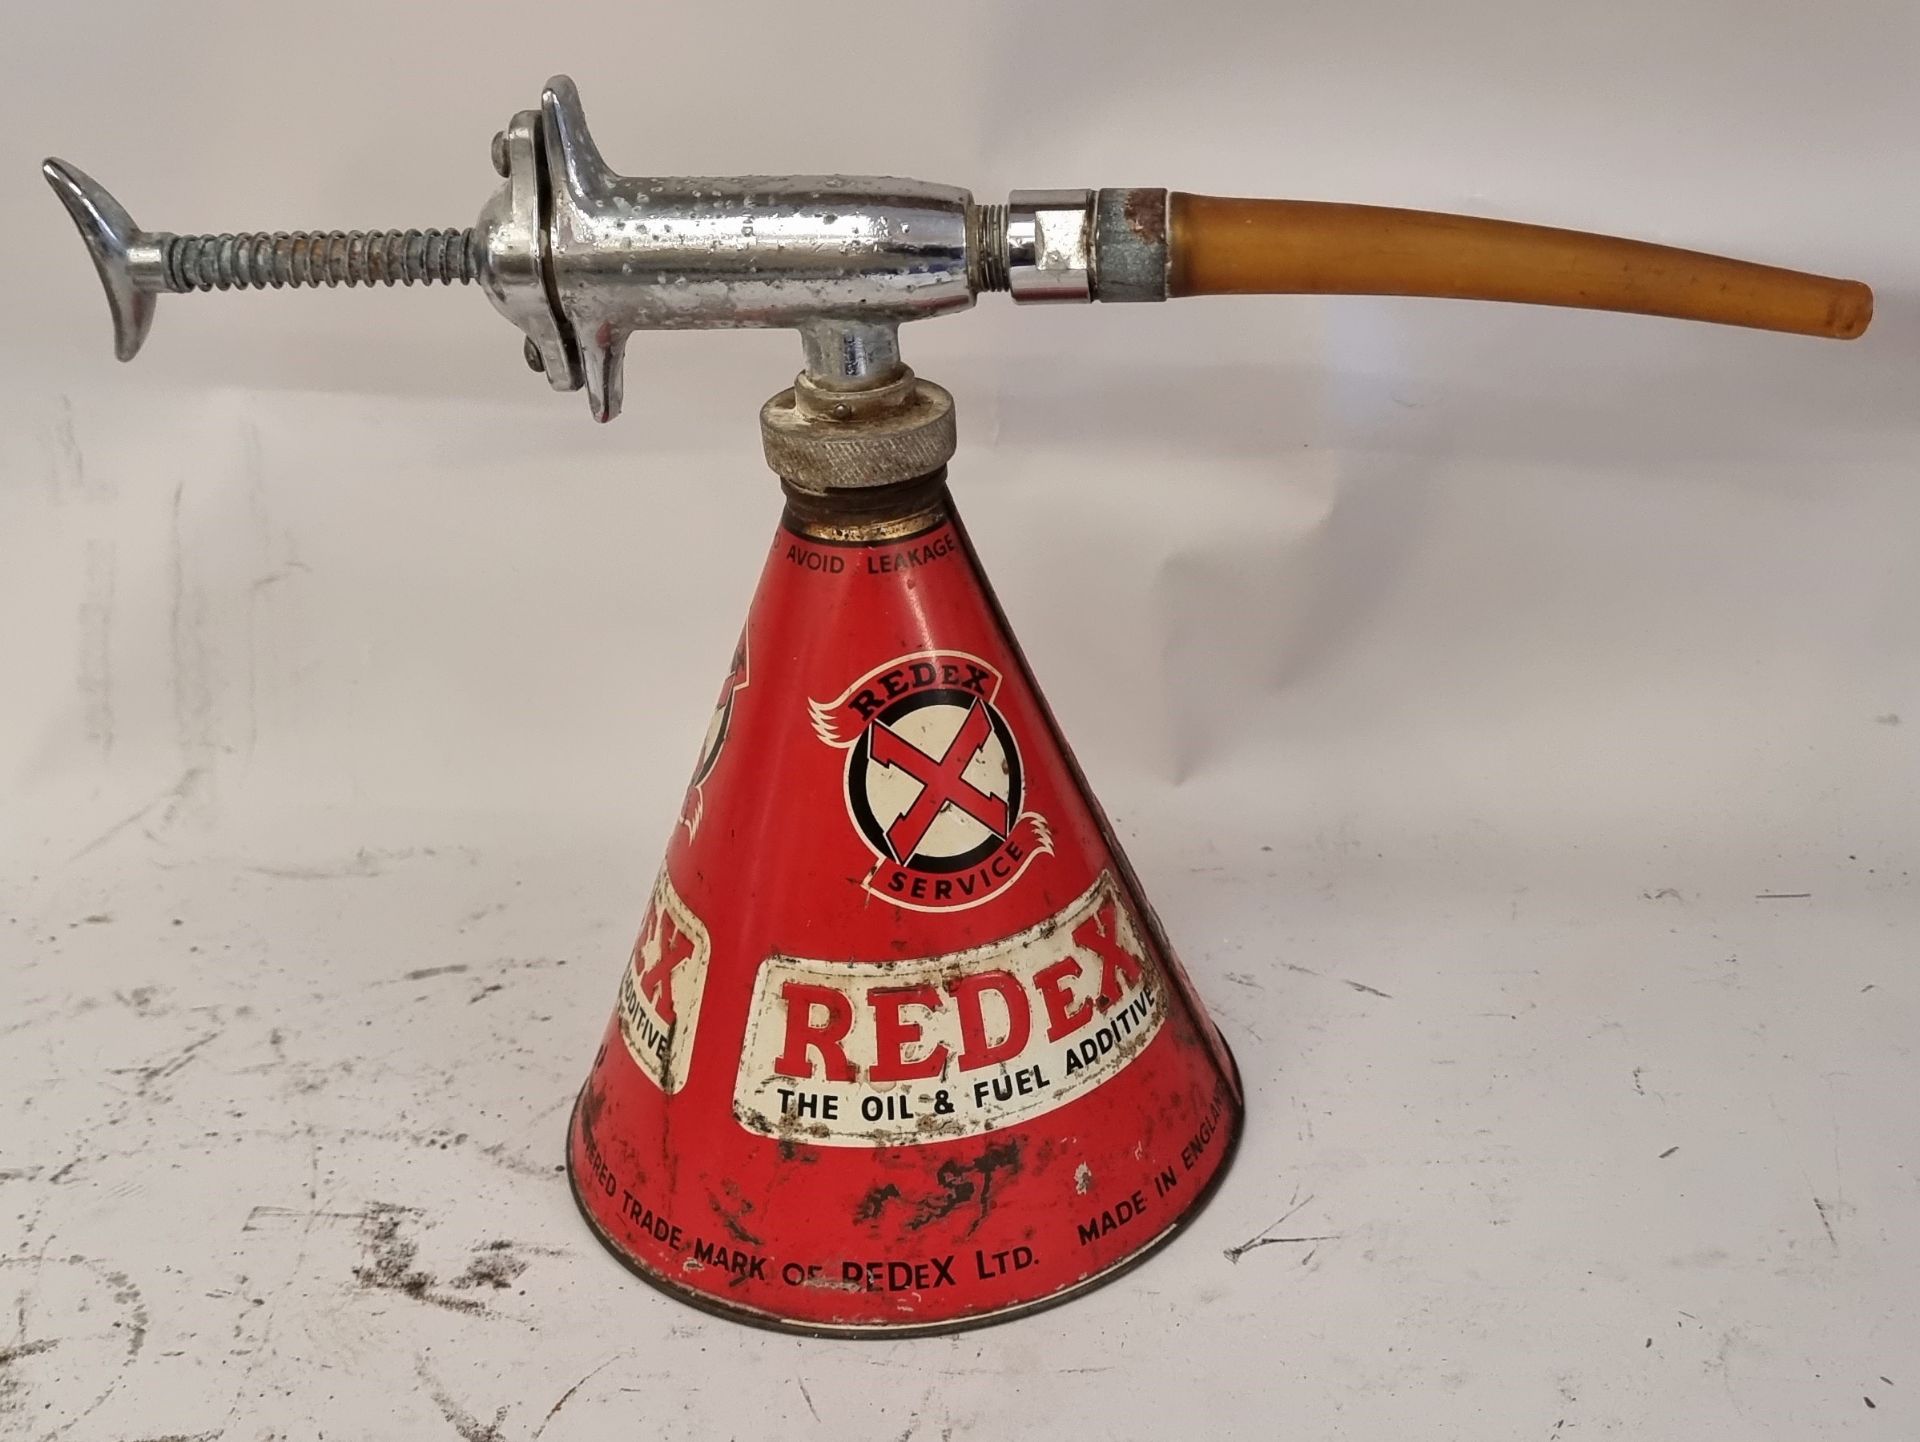 A Redex oil shot dispenser